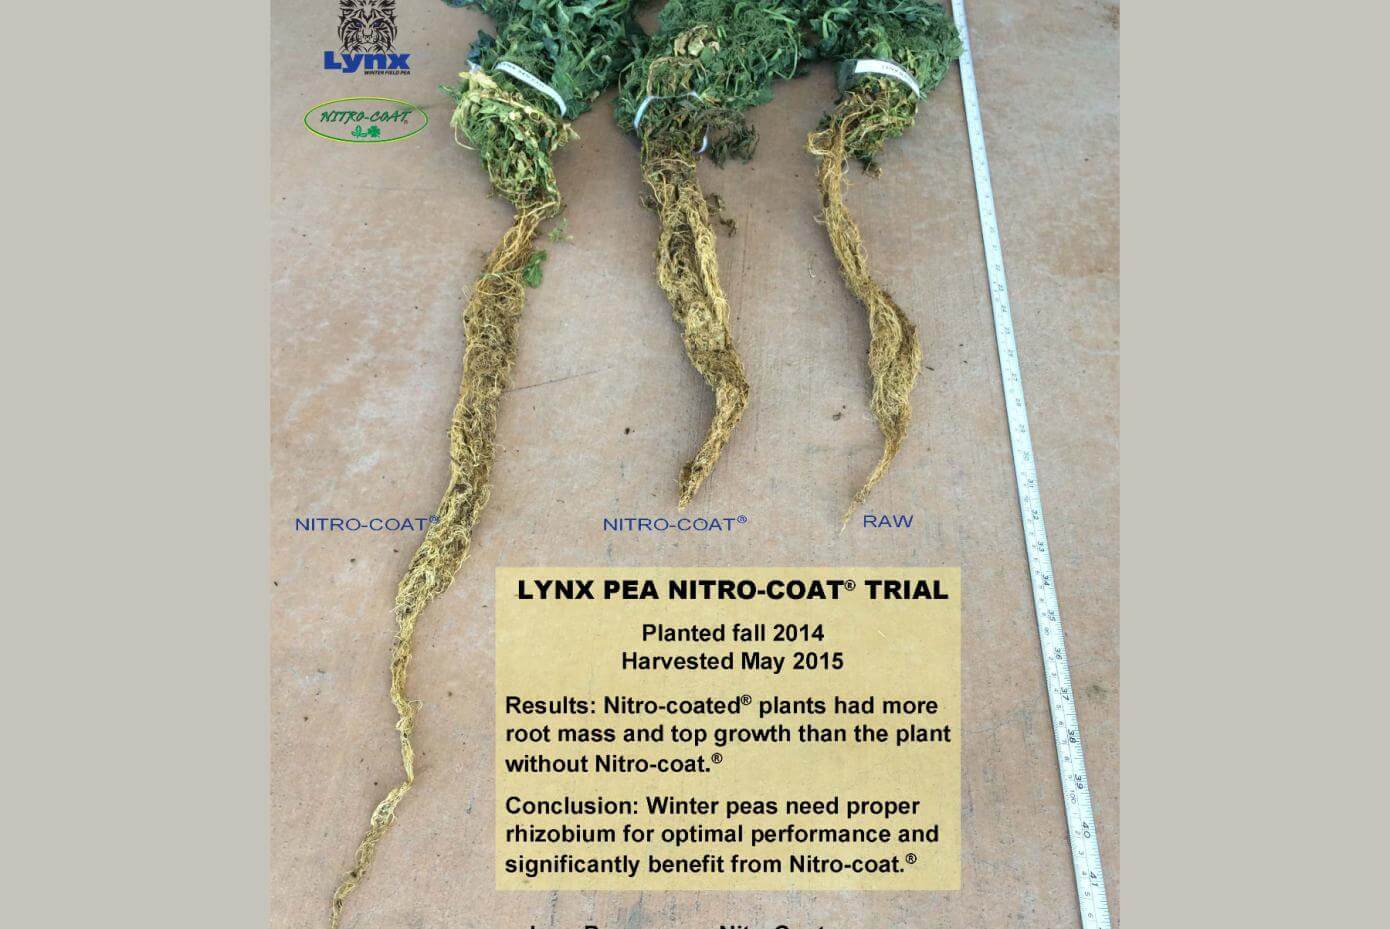 Comparison of Lynx pea coated vs. raw